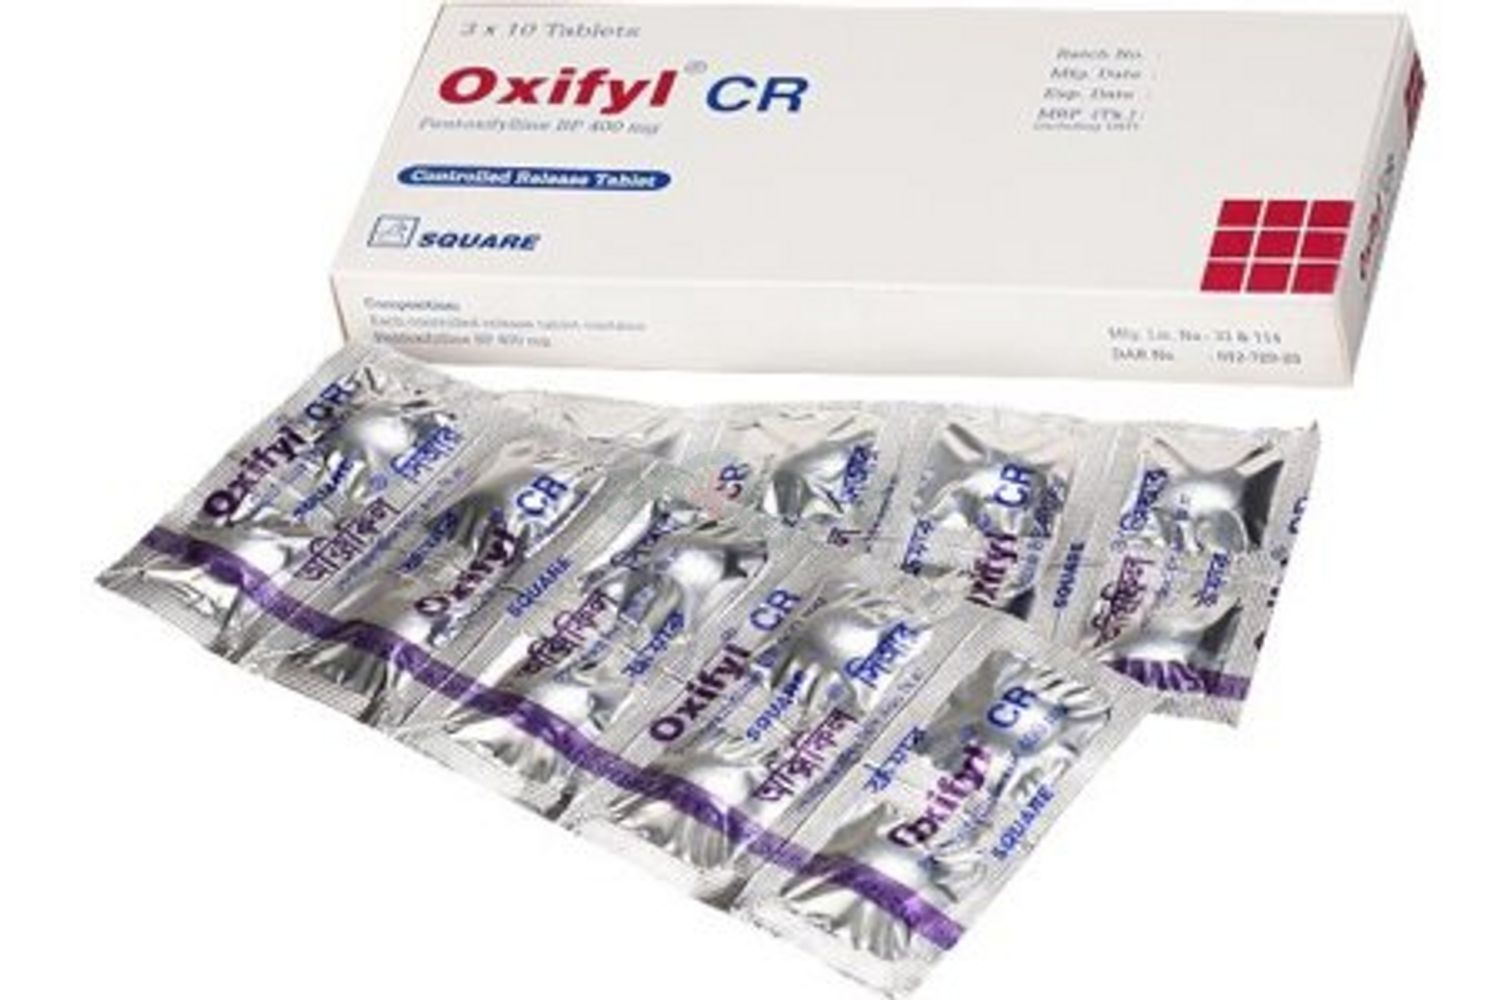 Oxifyl CR